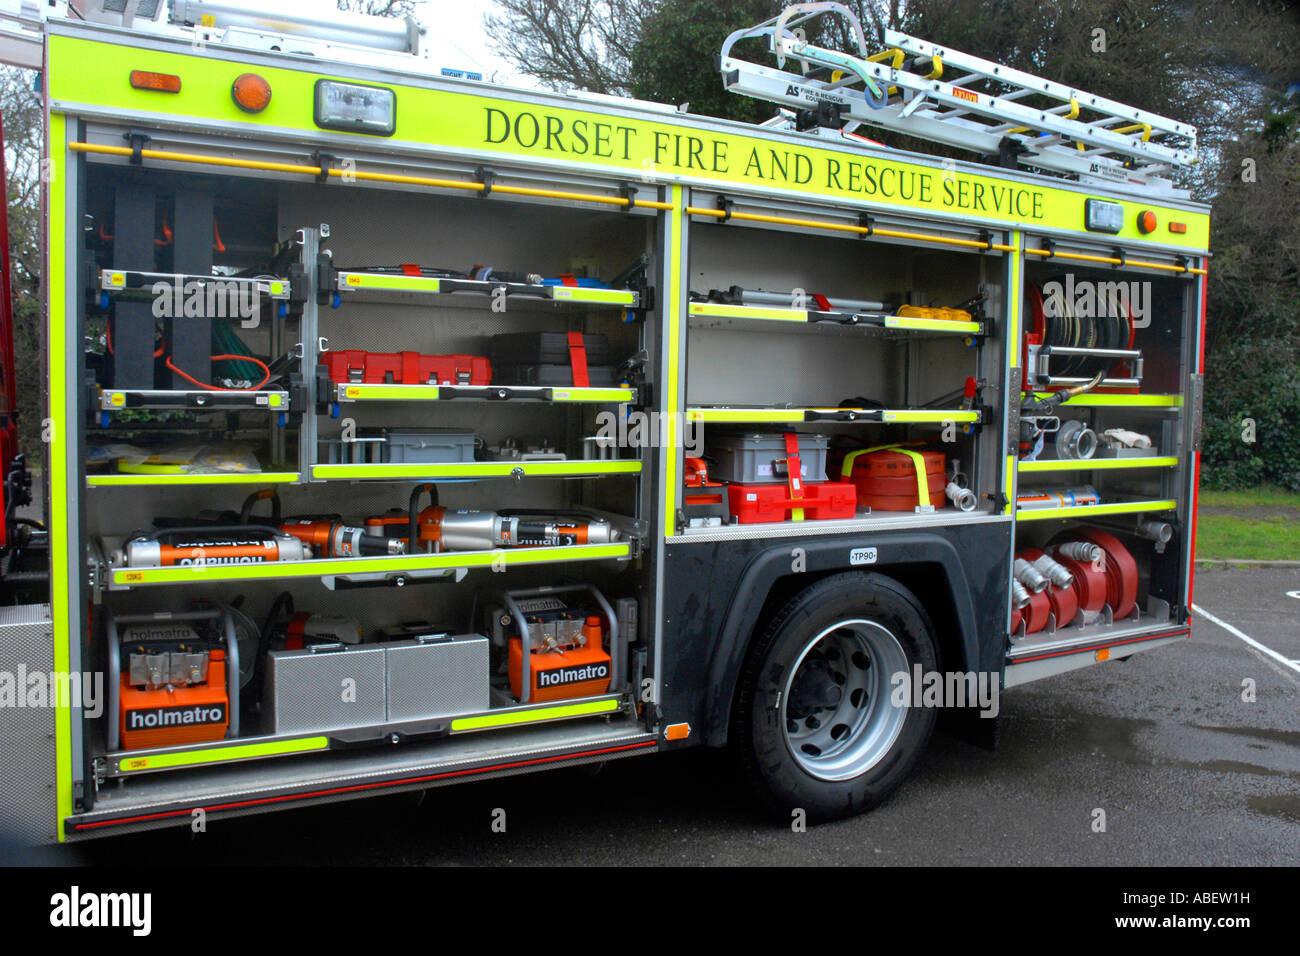 Scania P Series fire engine, Grande-Bretagne, Royaume-Uni Banque D'Images